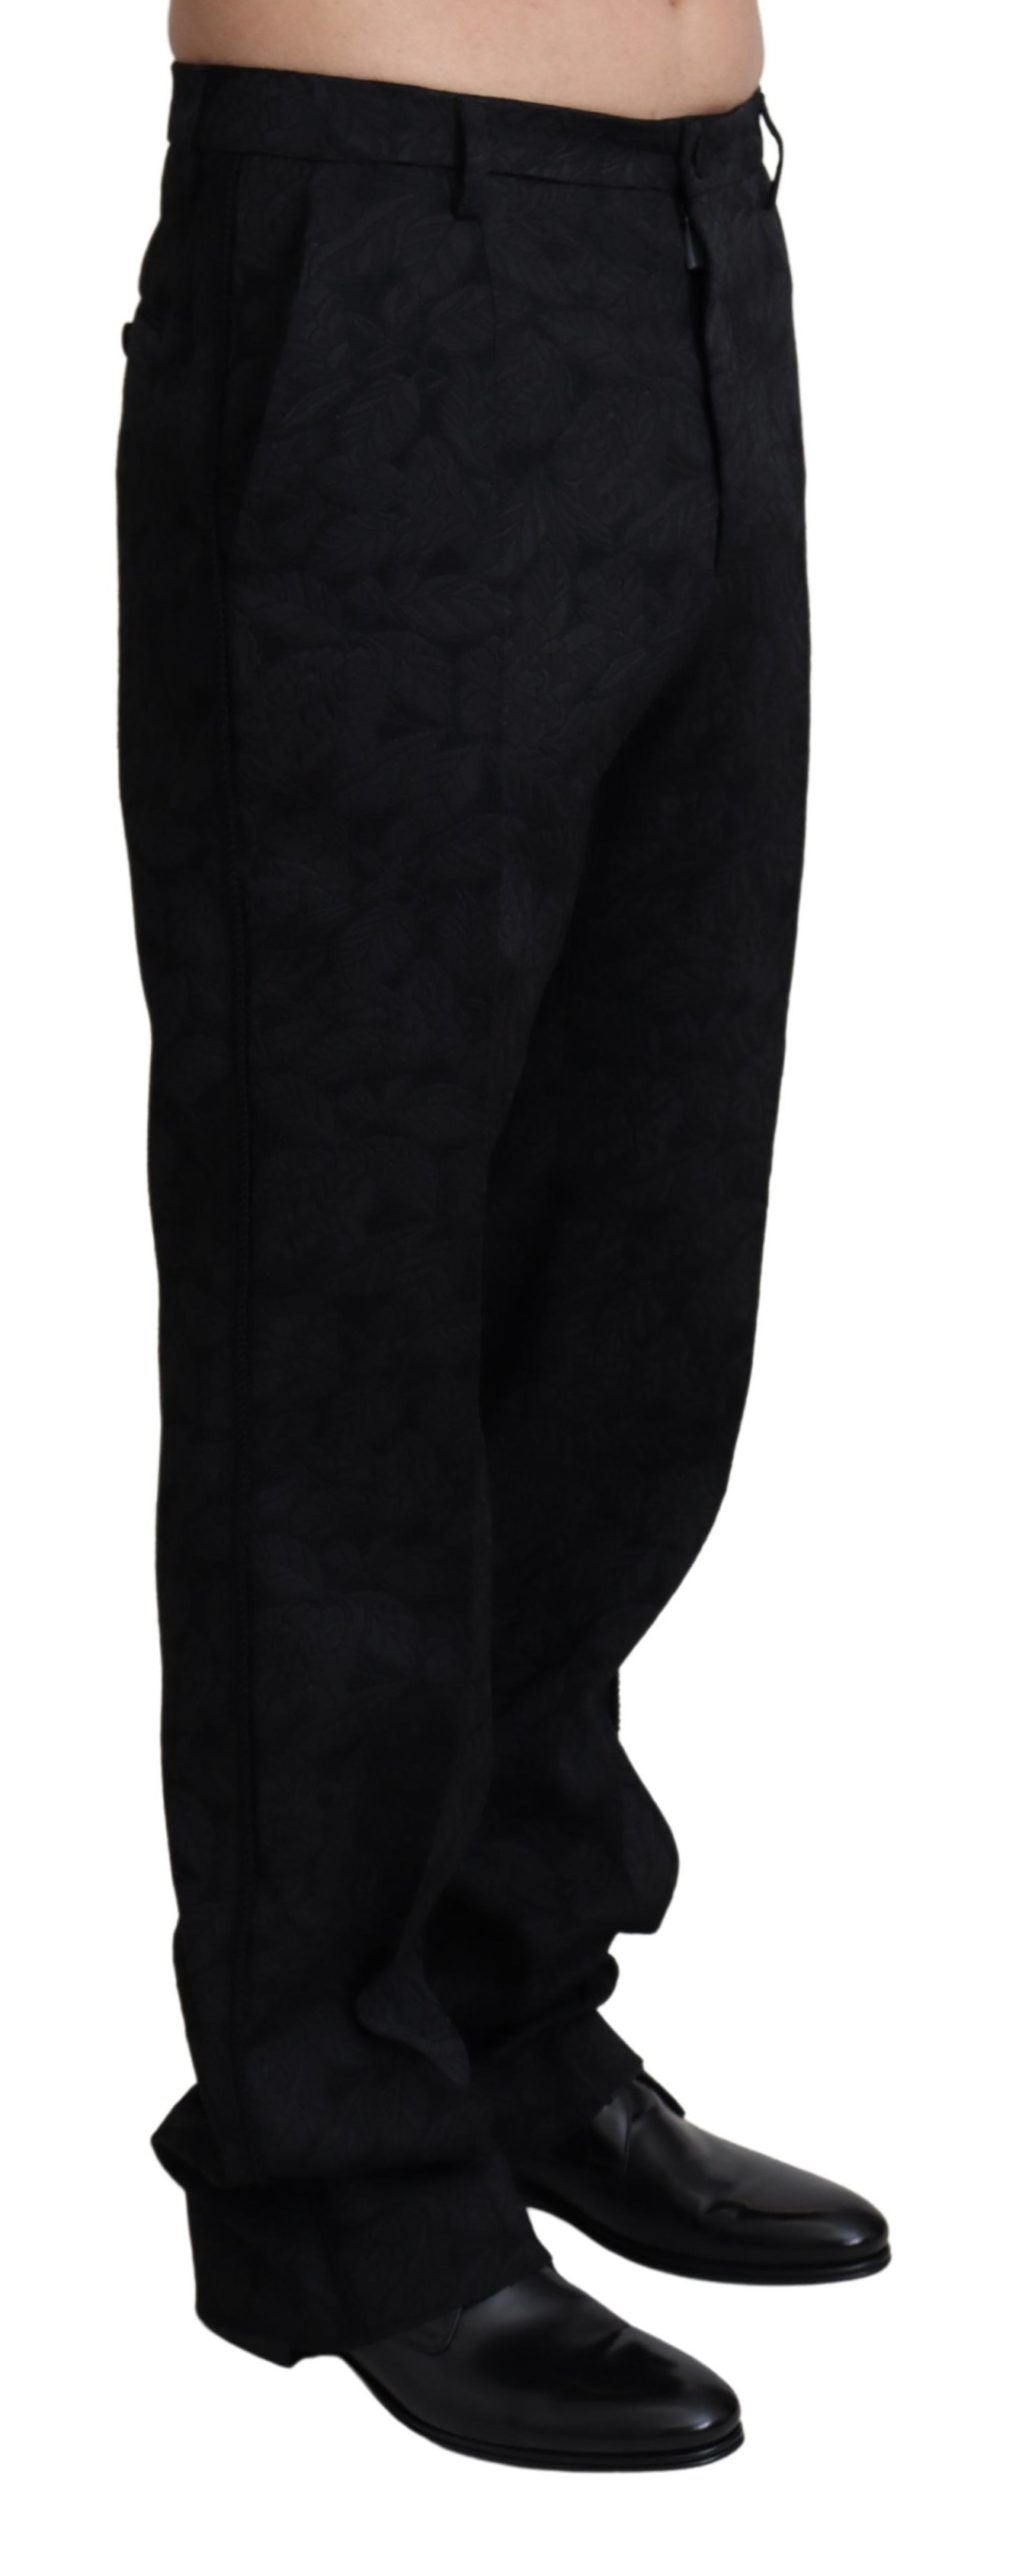 Elegant Black Dress Pants for Sophisticated Style